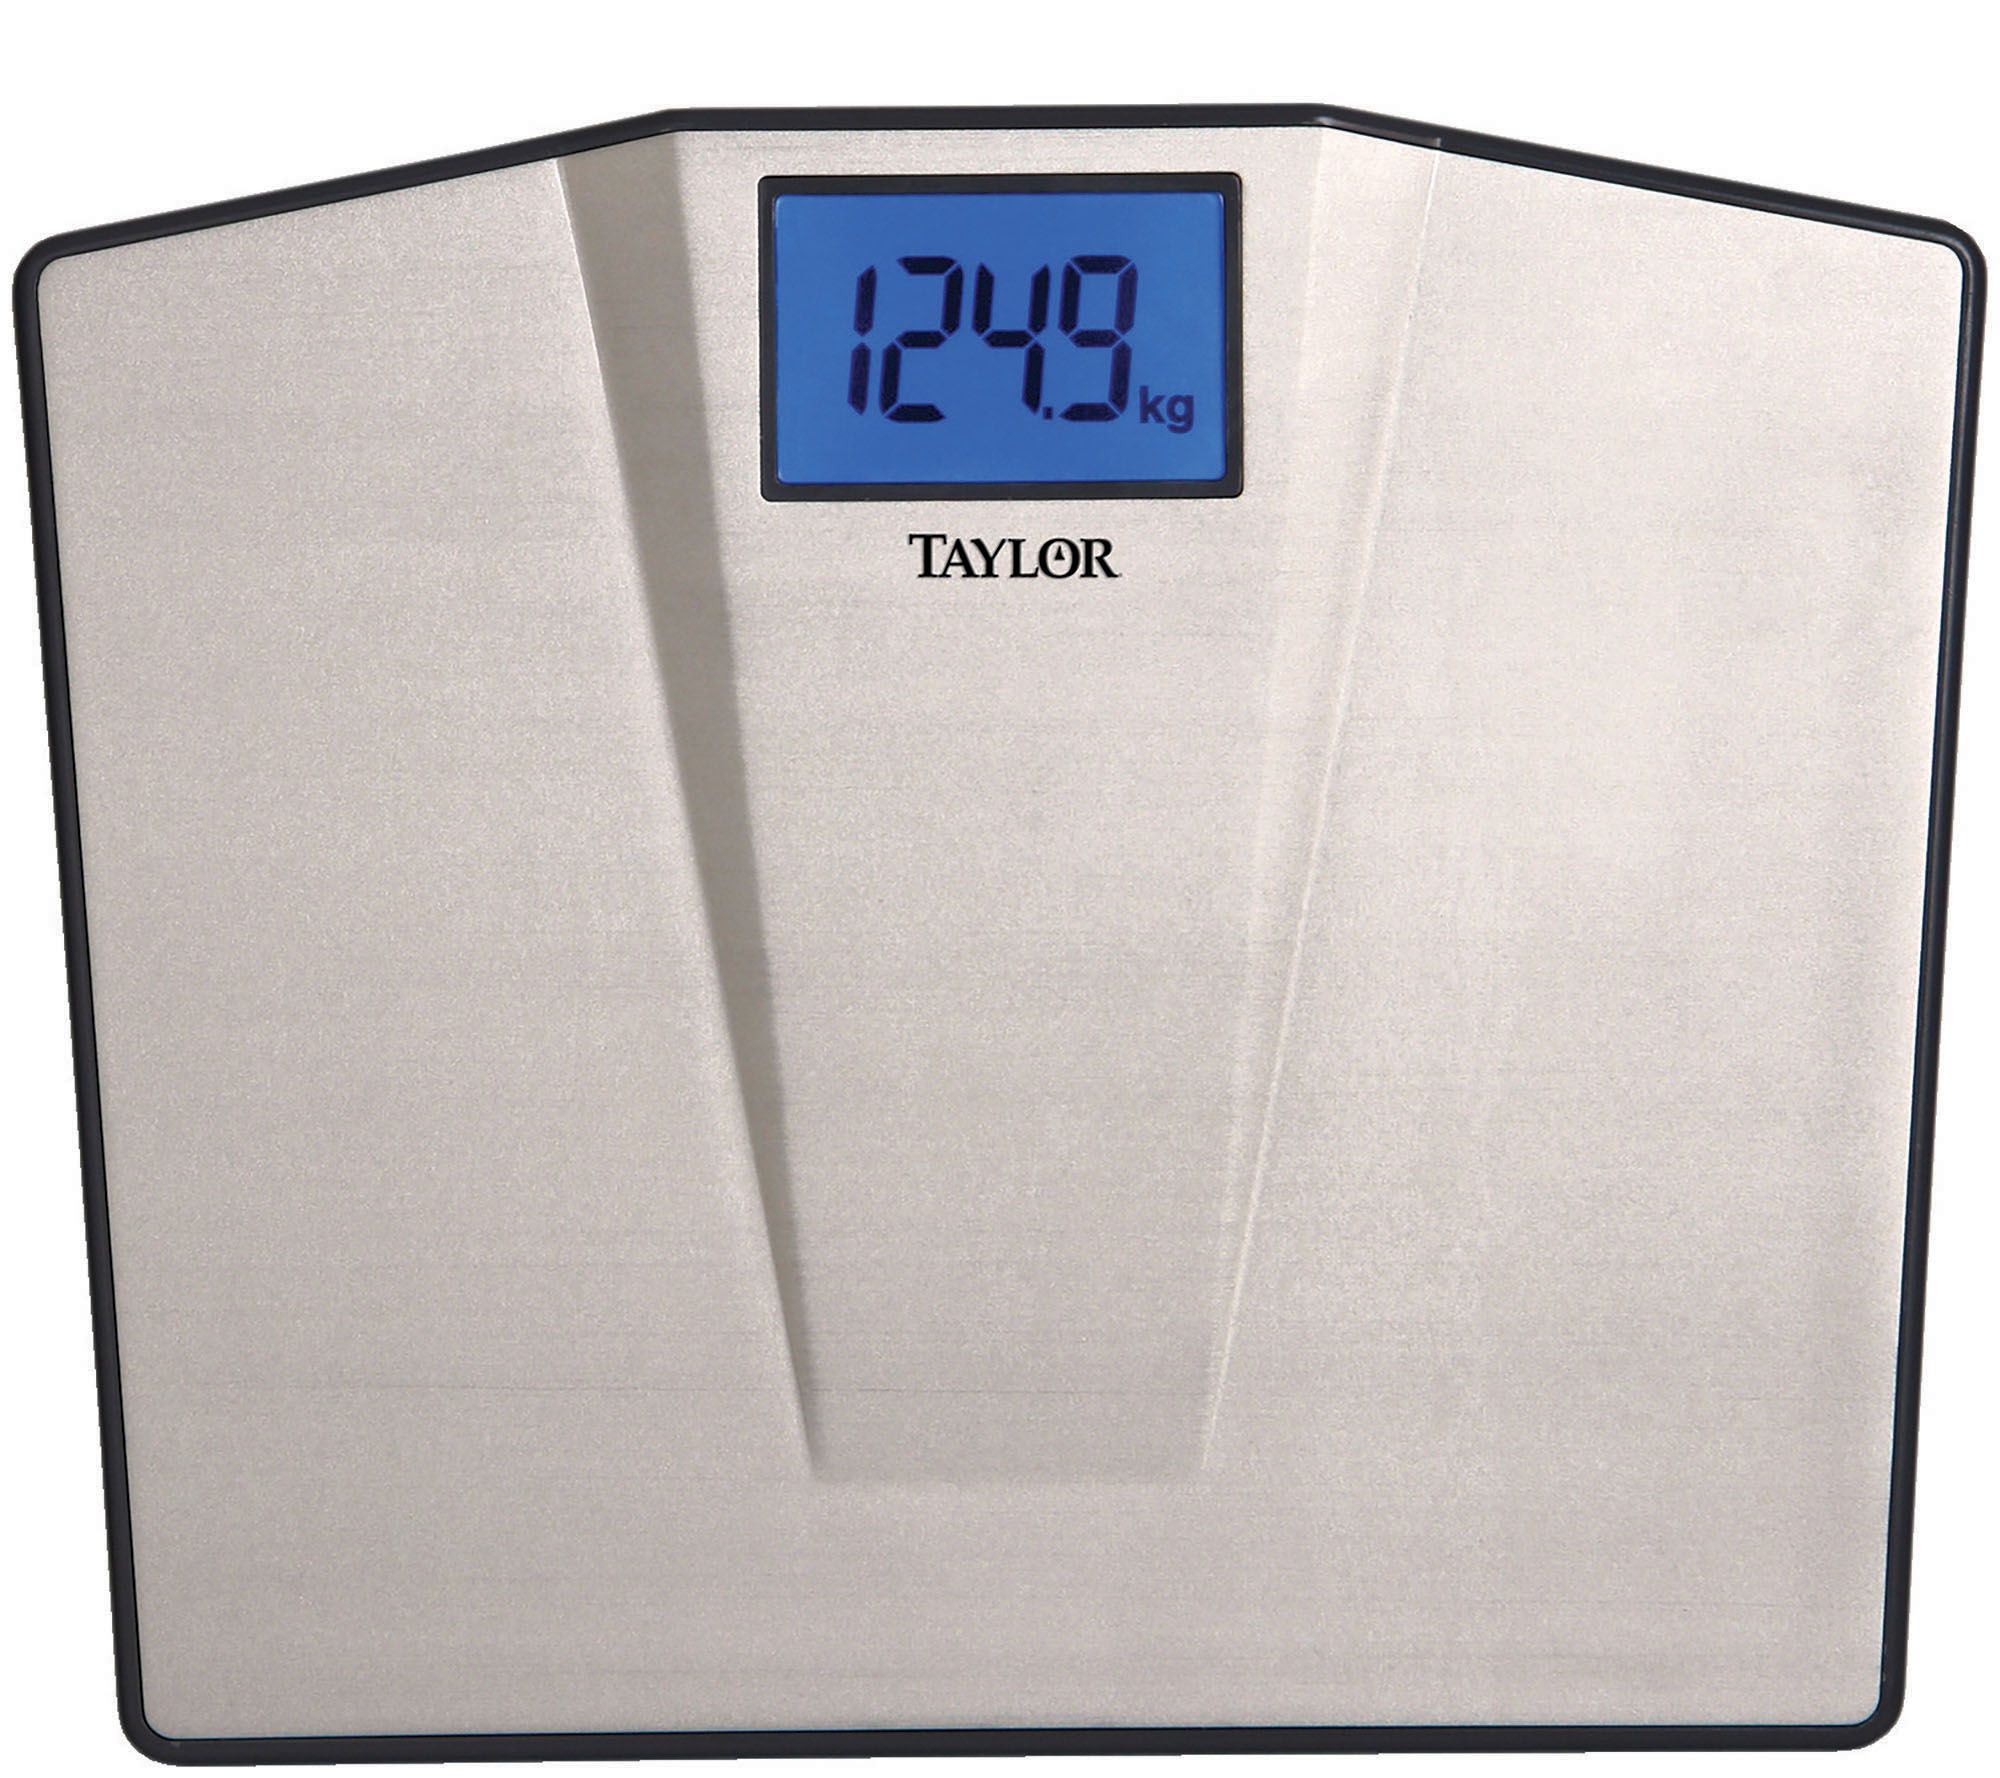 Taylor 7405 Electronic Bathroom Scale